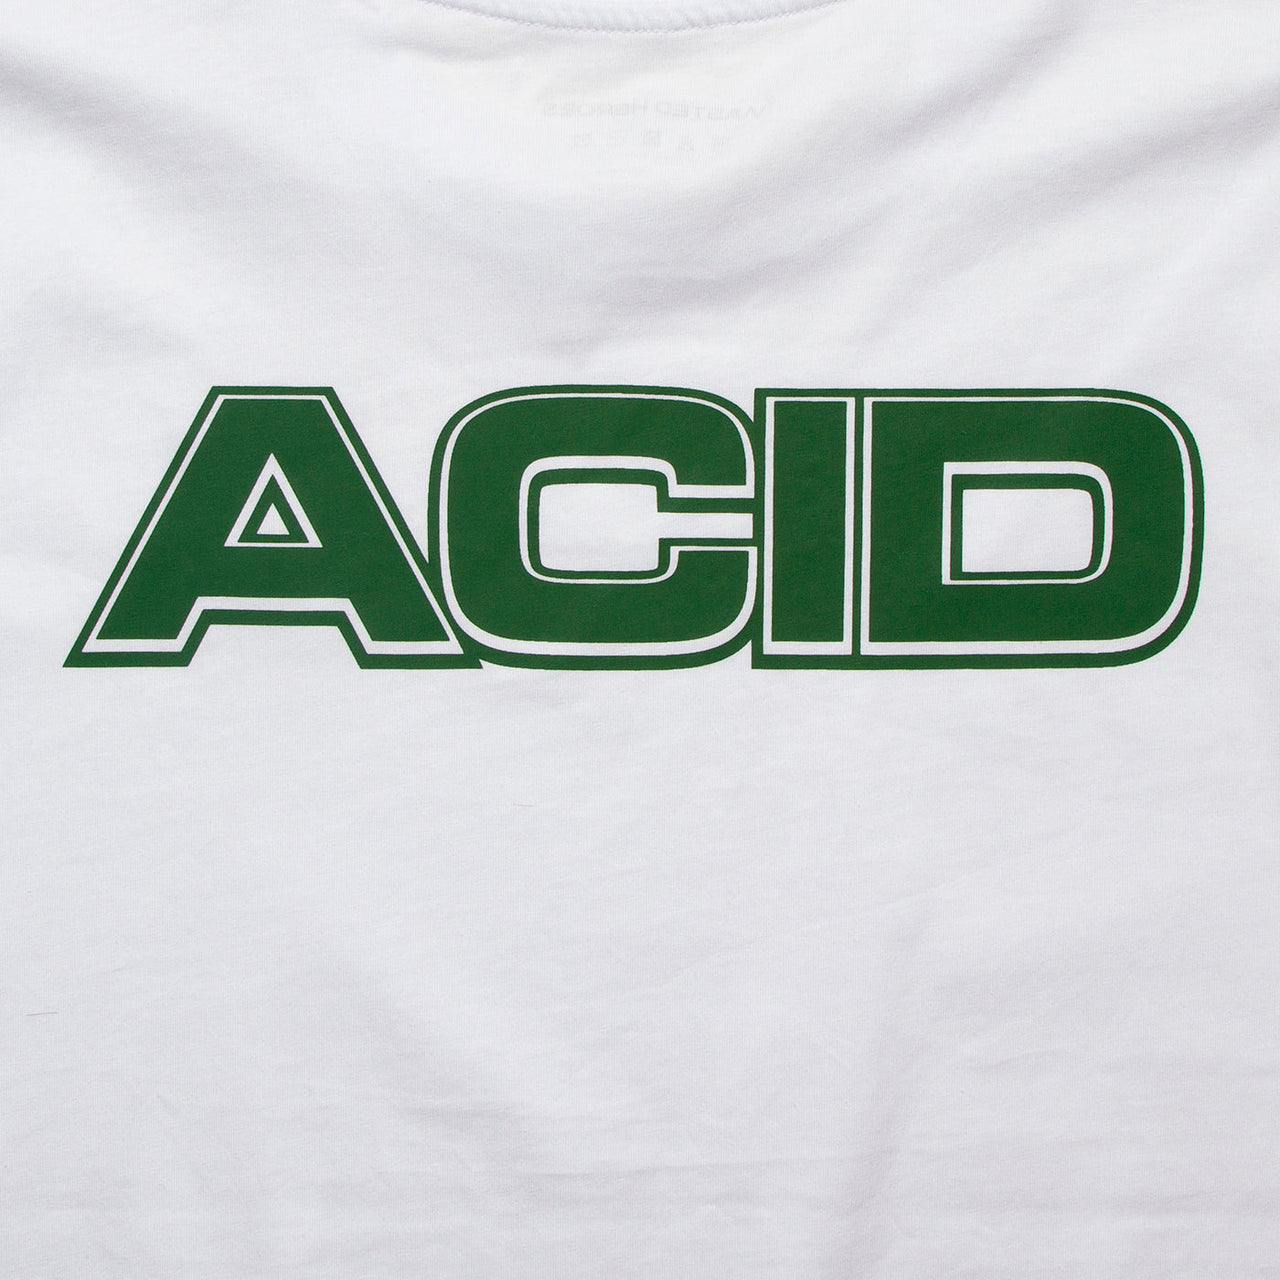 Acid Moto Front Print - Tshirt - White